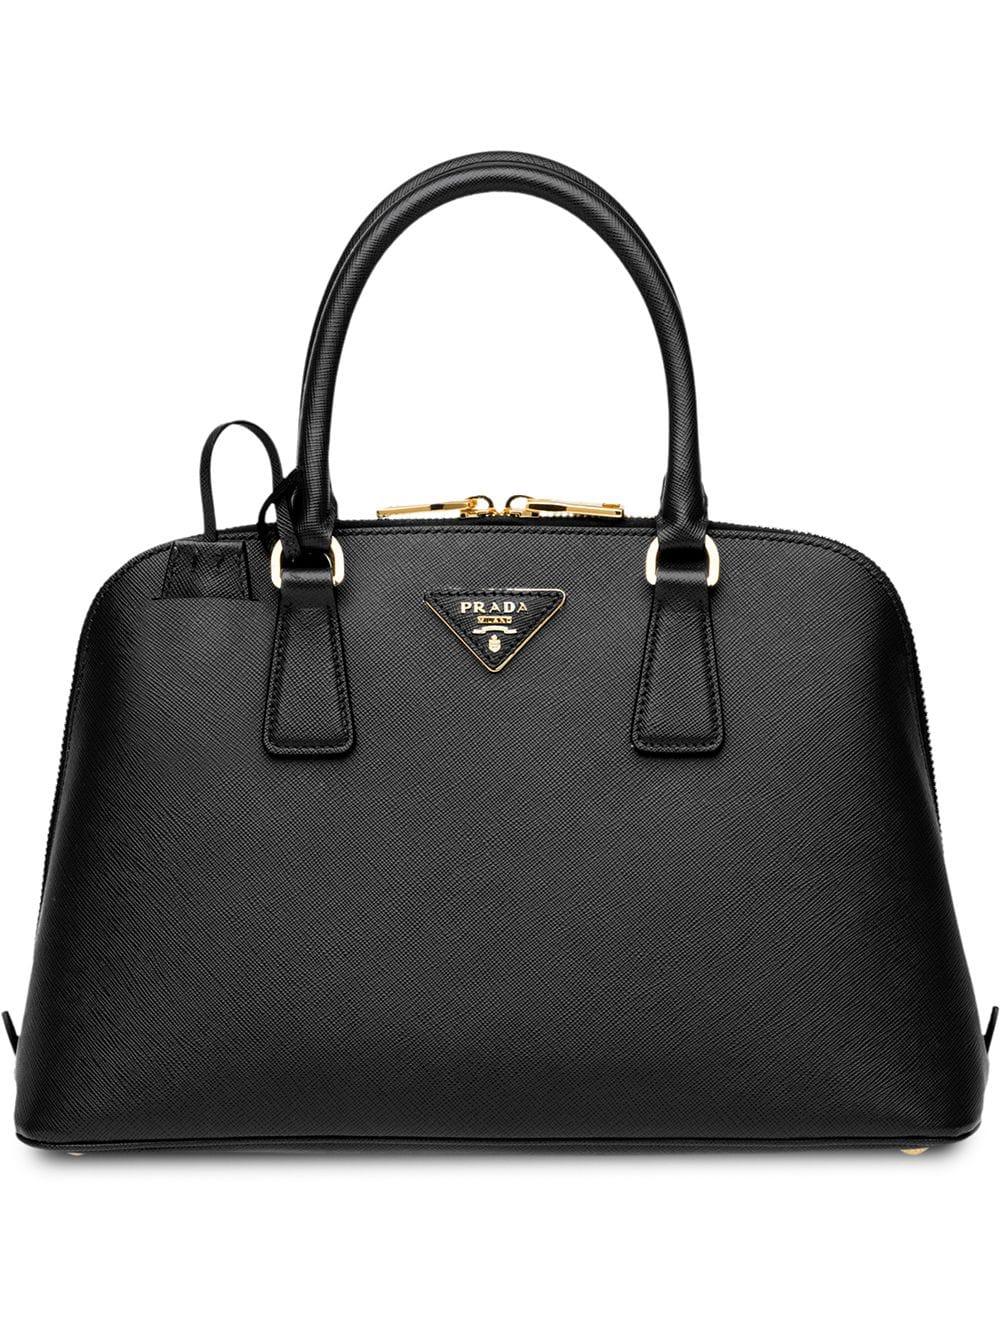 Prada Promenade Saffiano Leather Bag in Black | Lyst